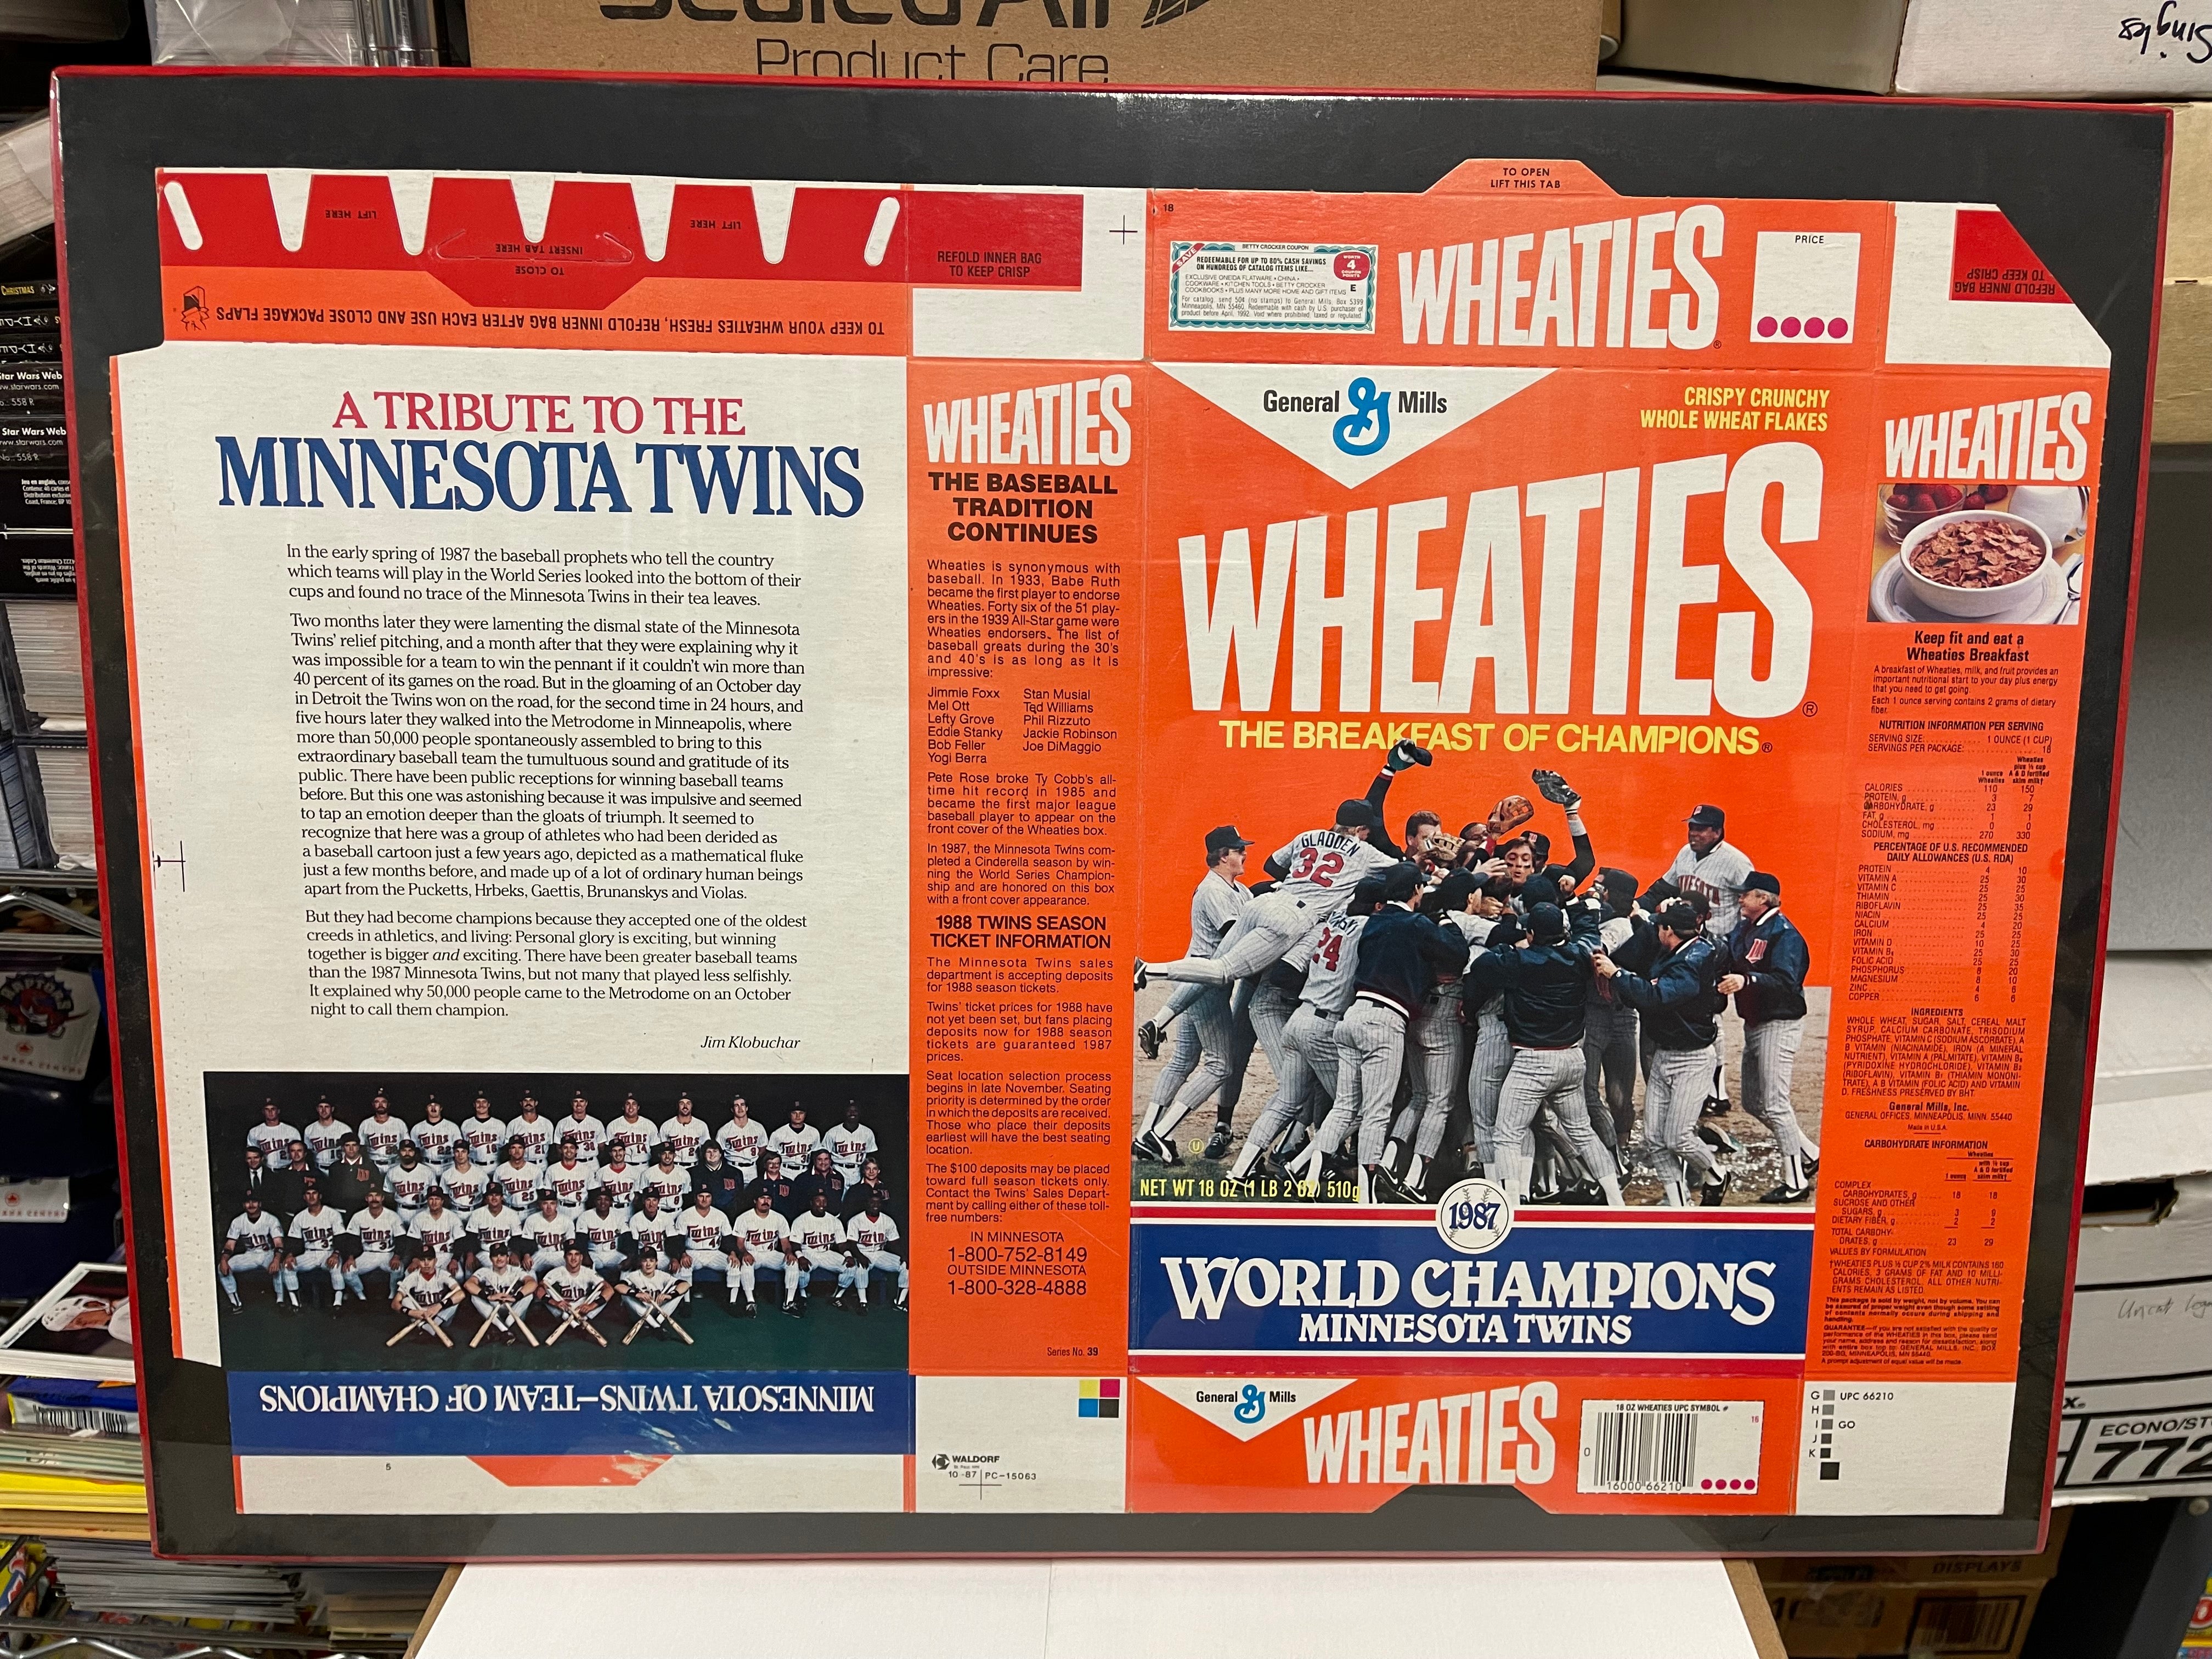 Minnesota Twins baseball champions flat Wheaties cereal box 1987